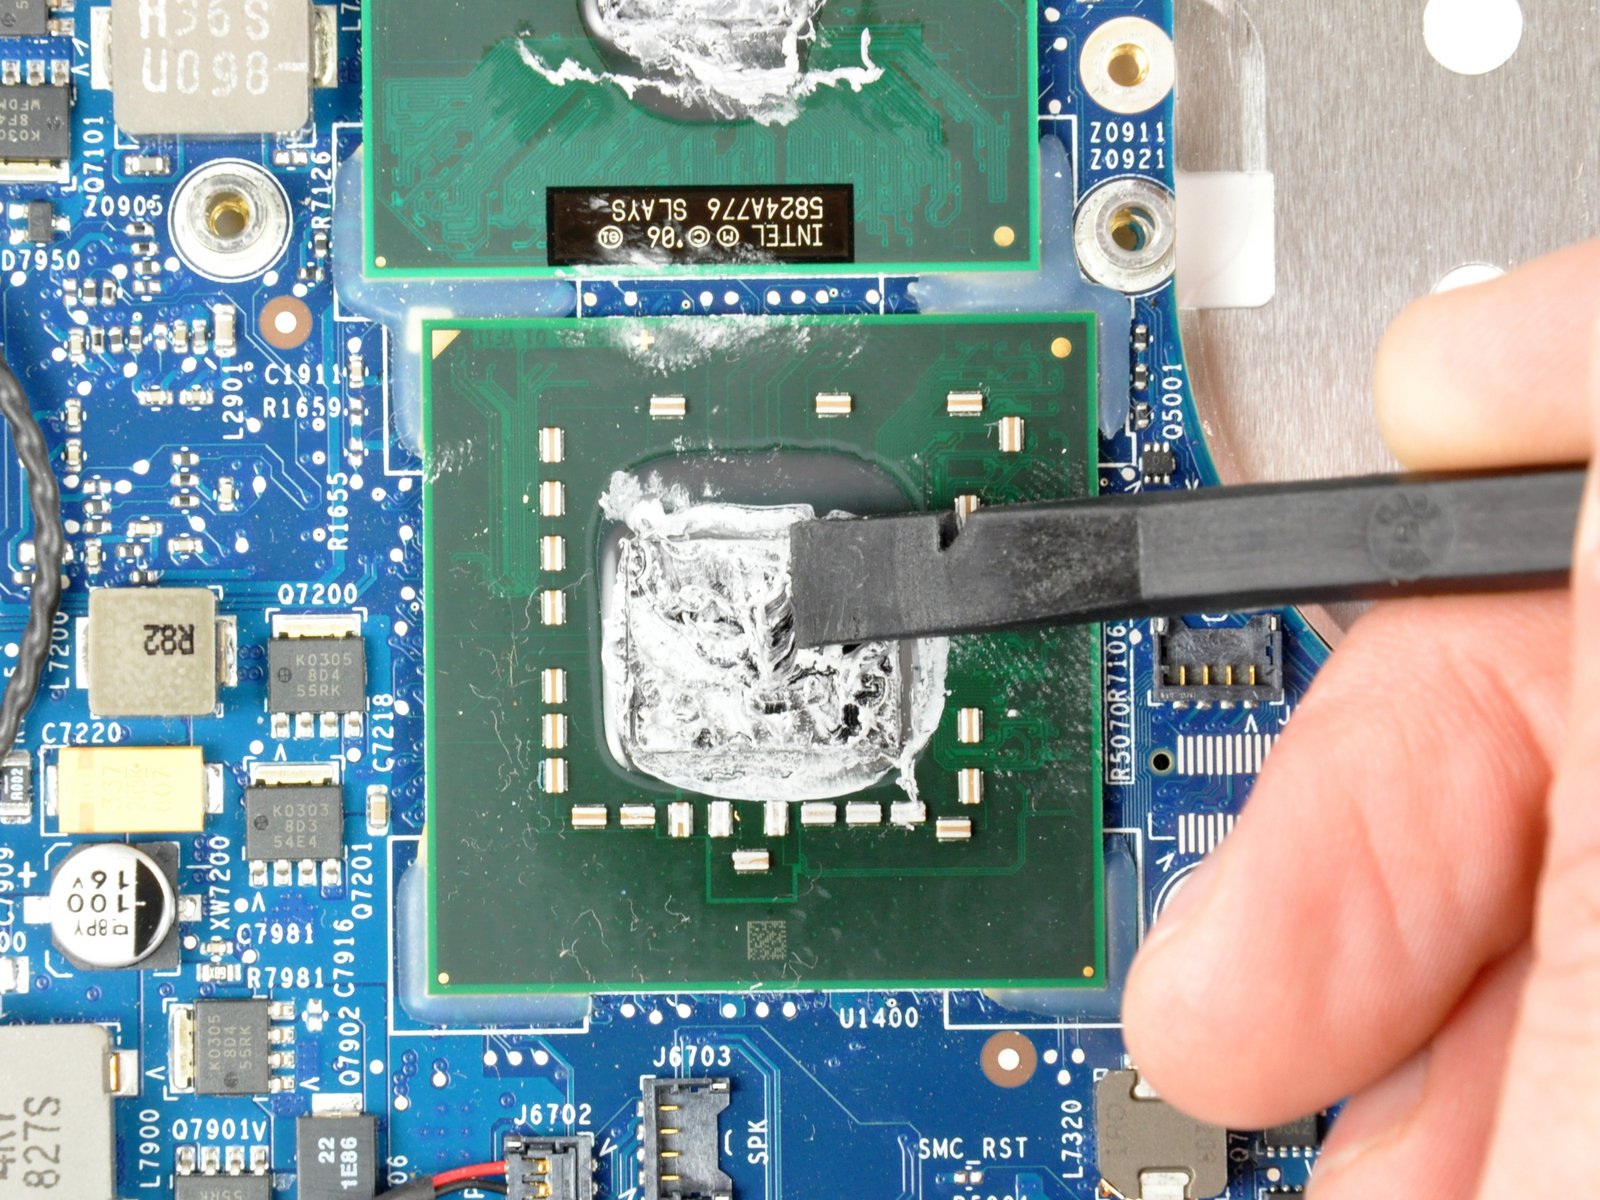 Authorization unpaid satisfaction Cum se aplica pasta termoconductoare la un laptop, calculator sau  All-in-one PC? - Blog - OnLaptop.ro